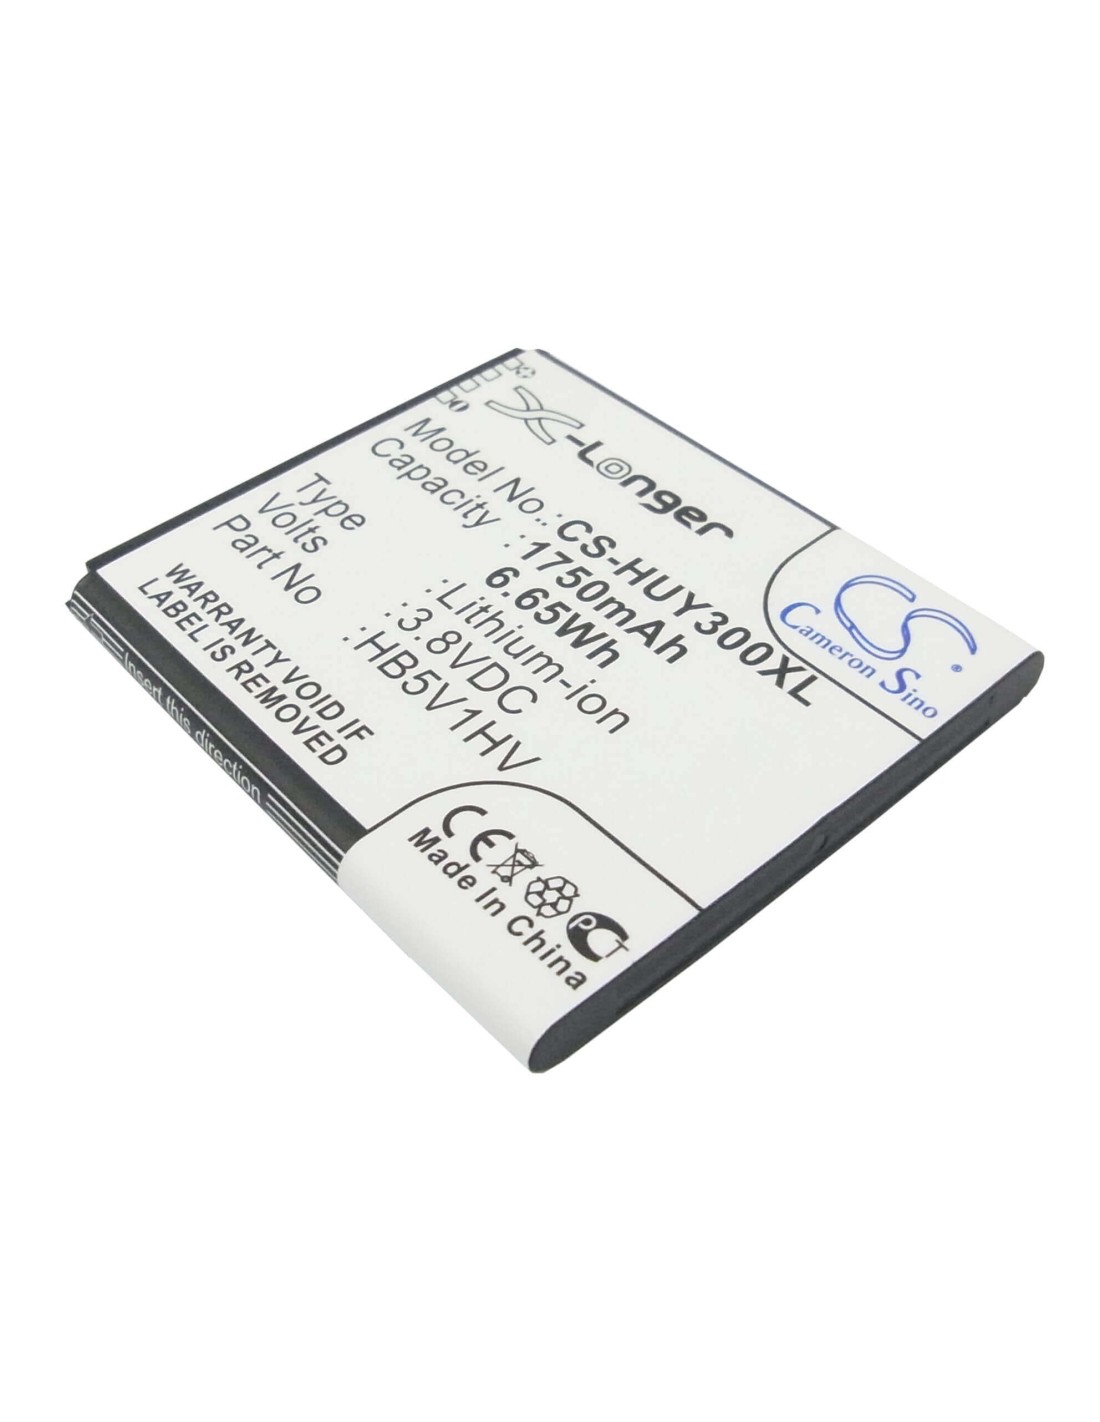 Battery for Huawei Y300, Y300C, U8833 3.8V, 1750mAh - 6.65Wh